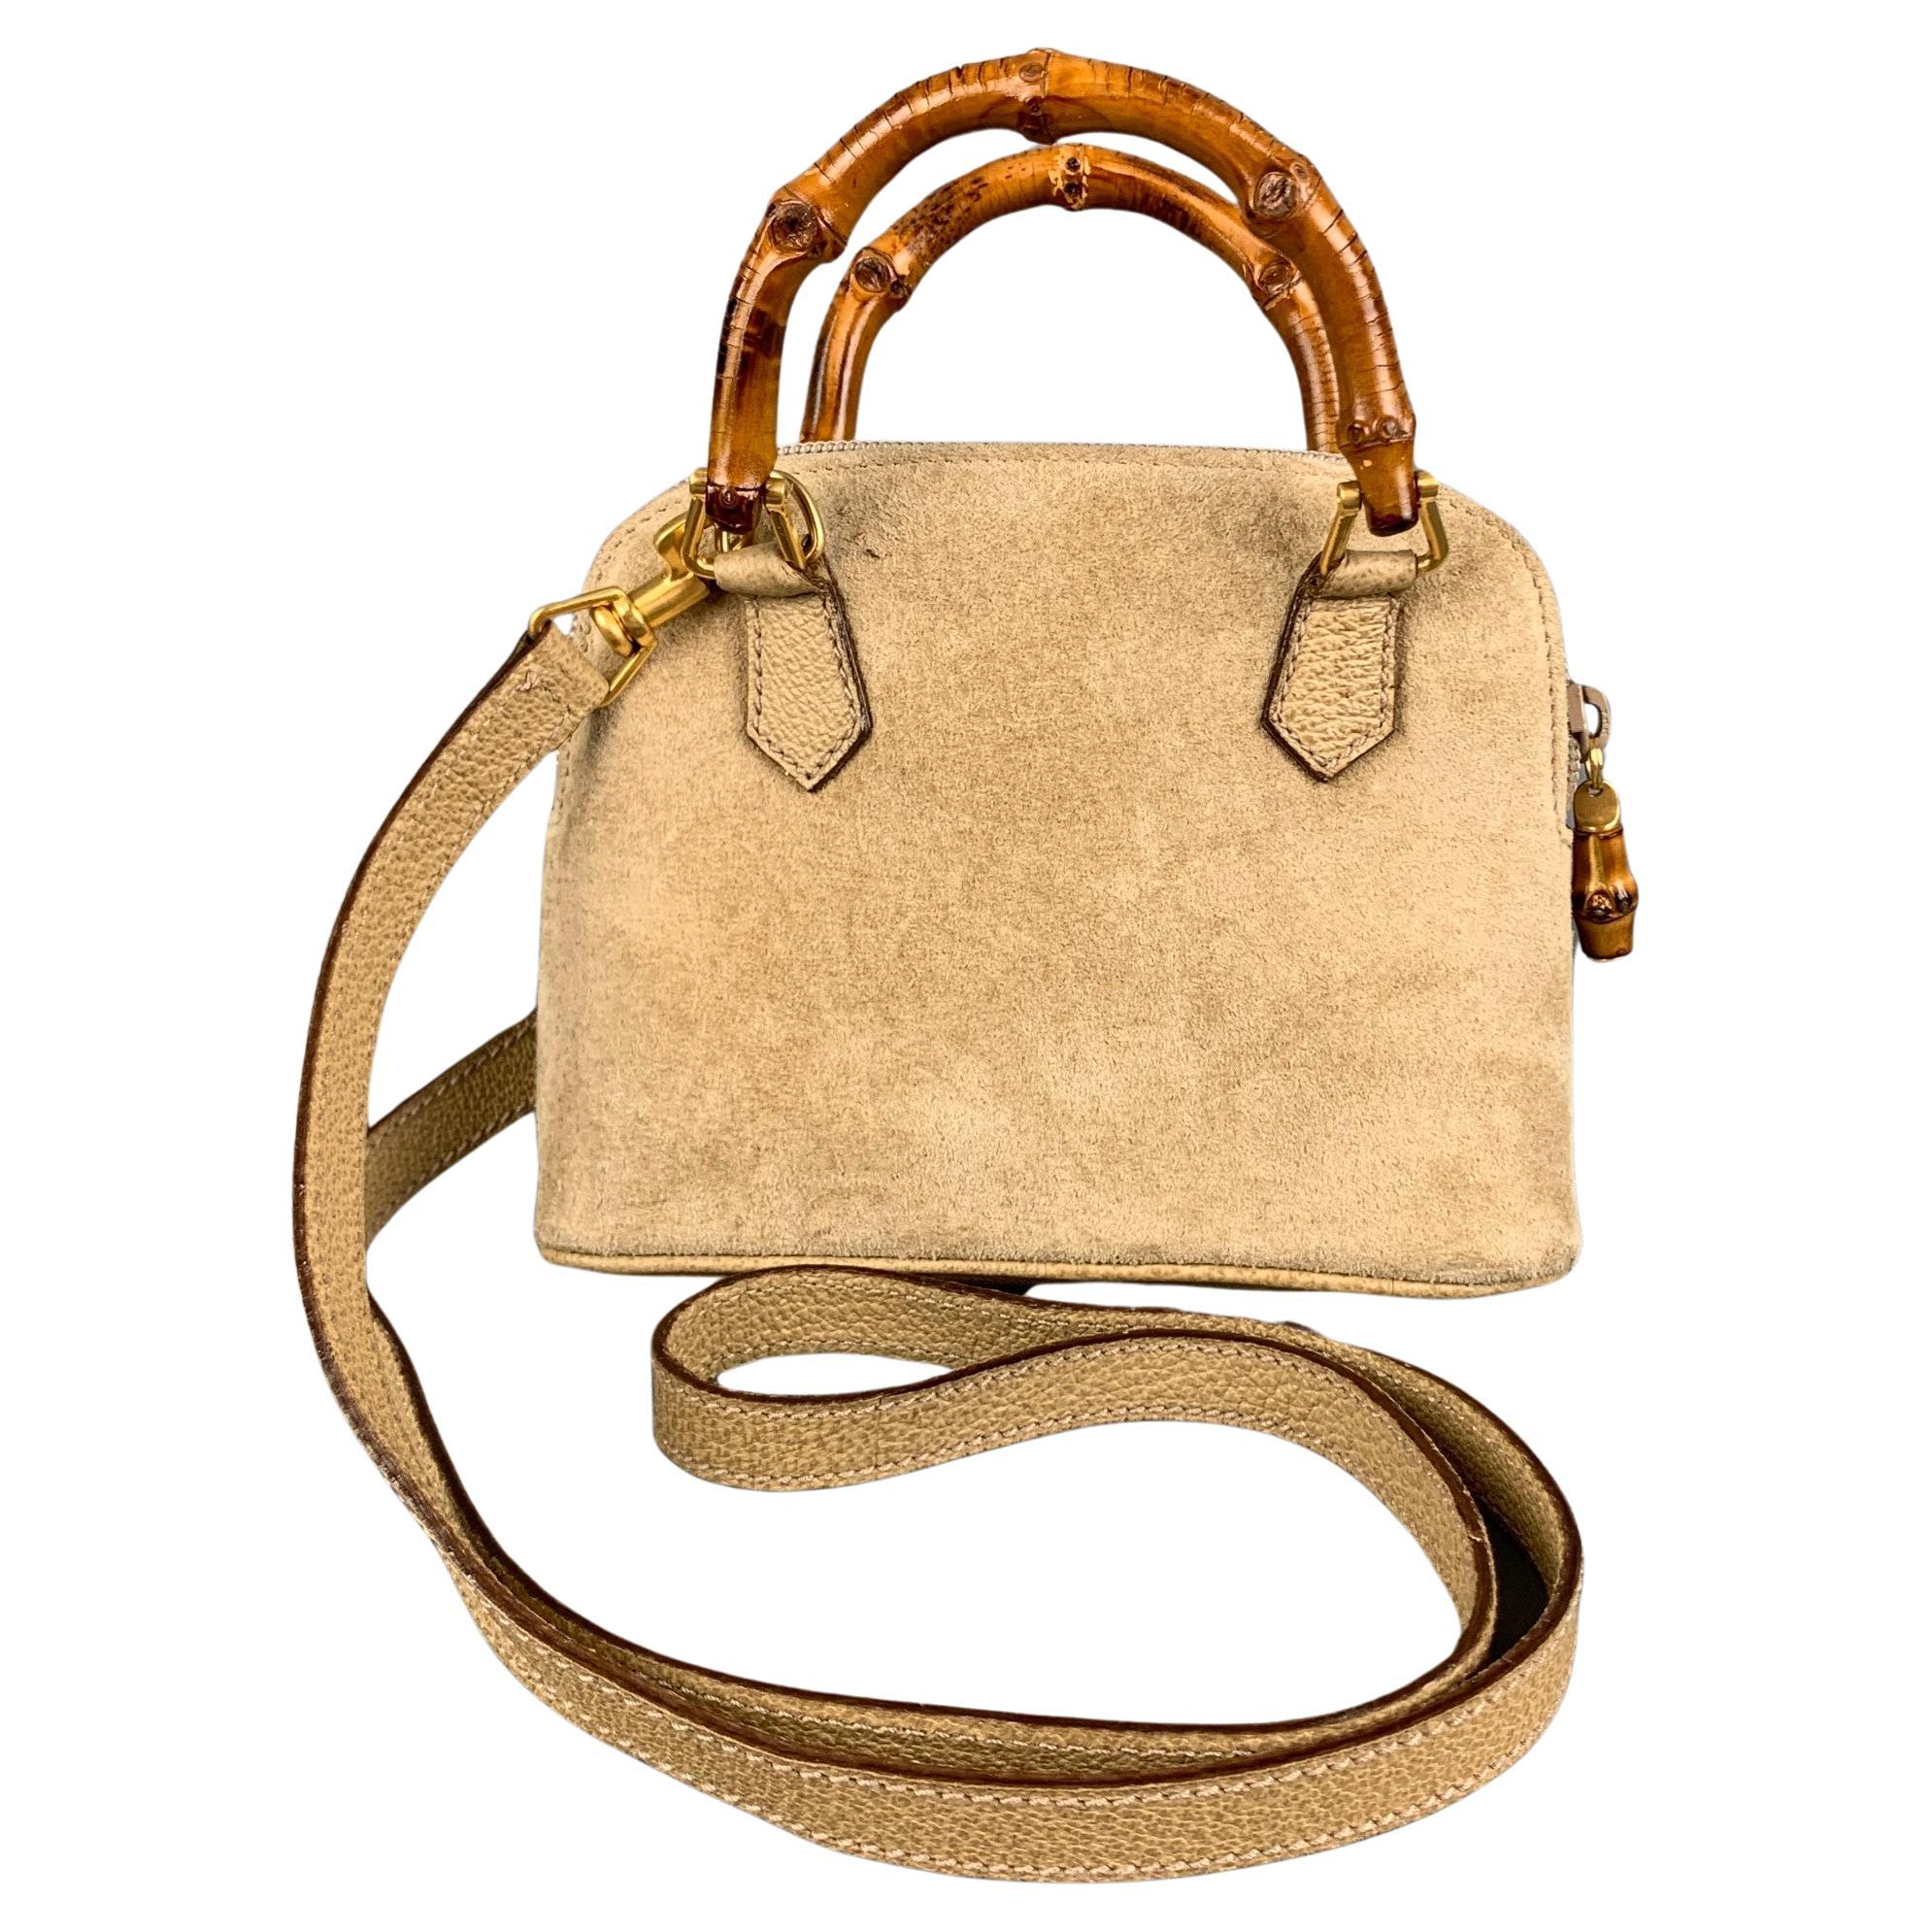 GUCCI Vintage Beige Suede Leather Mini Handbag